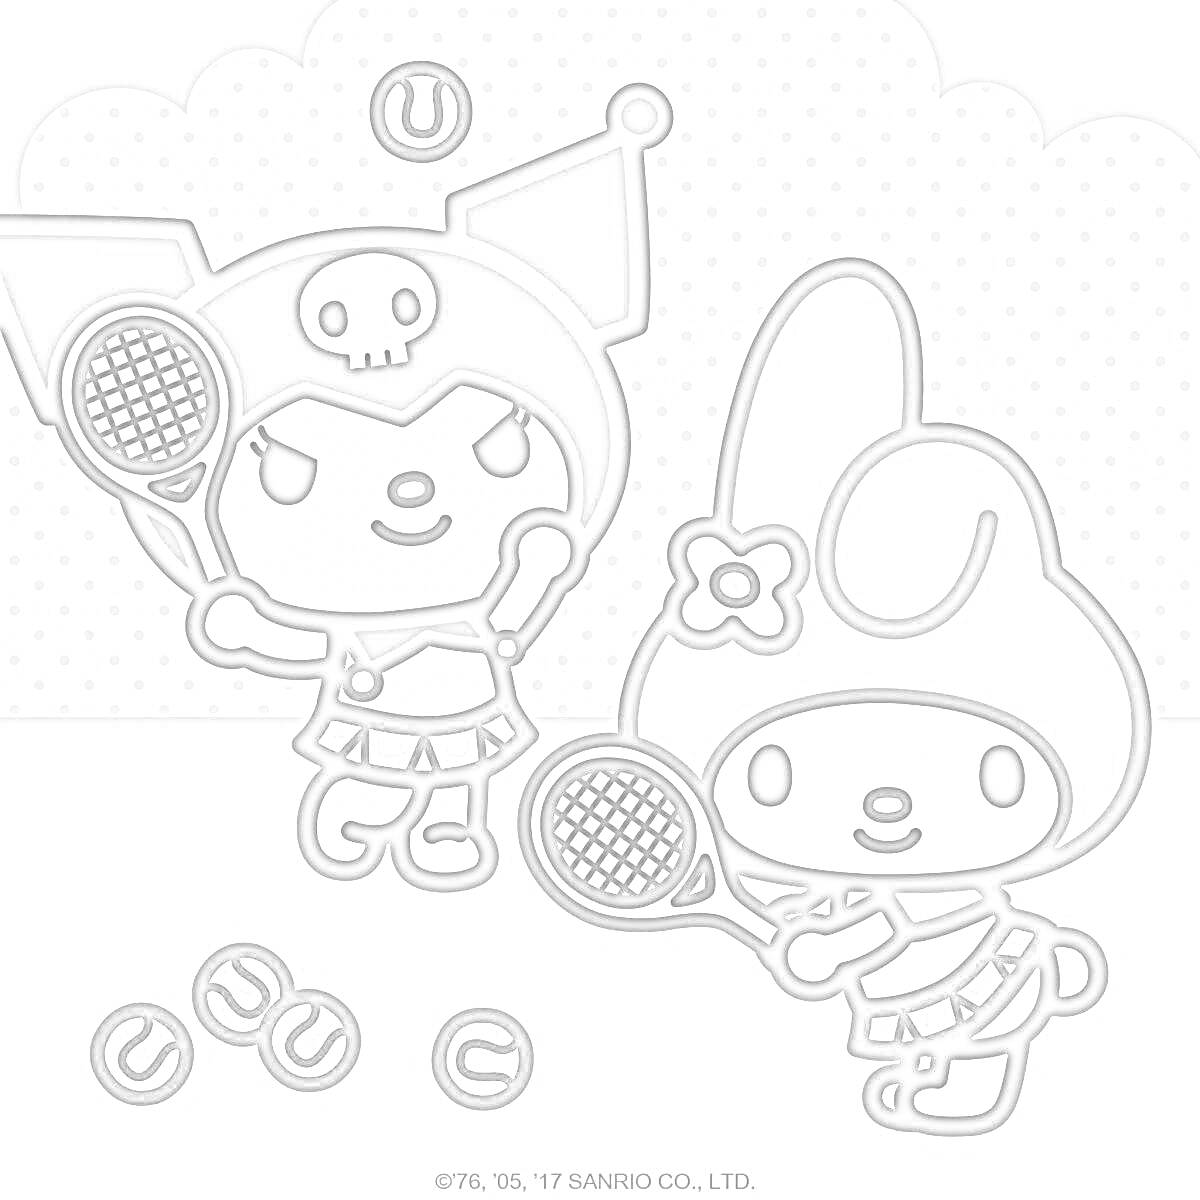 Раскраска Персонажи Санрио играют в теннис, два персонажа с ракетками, теннисные мячи на земле